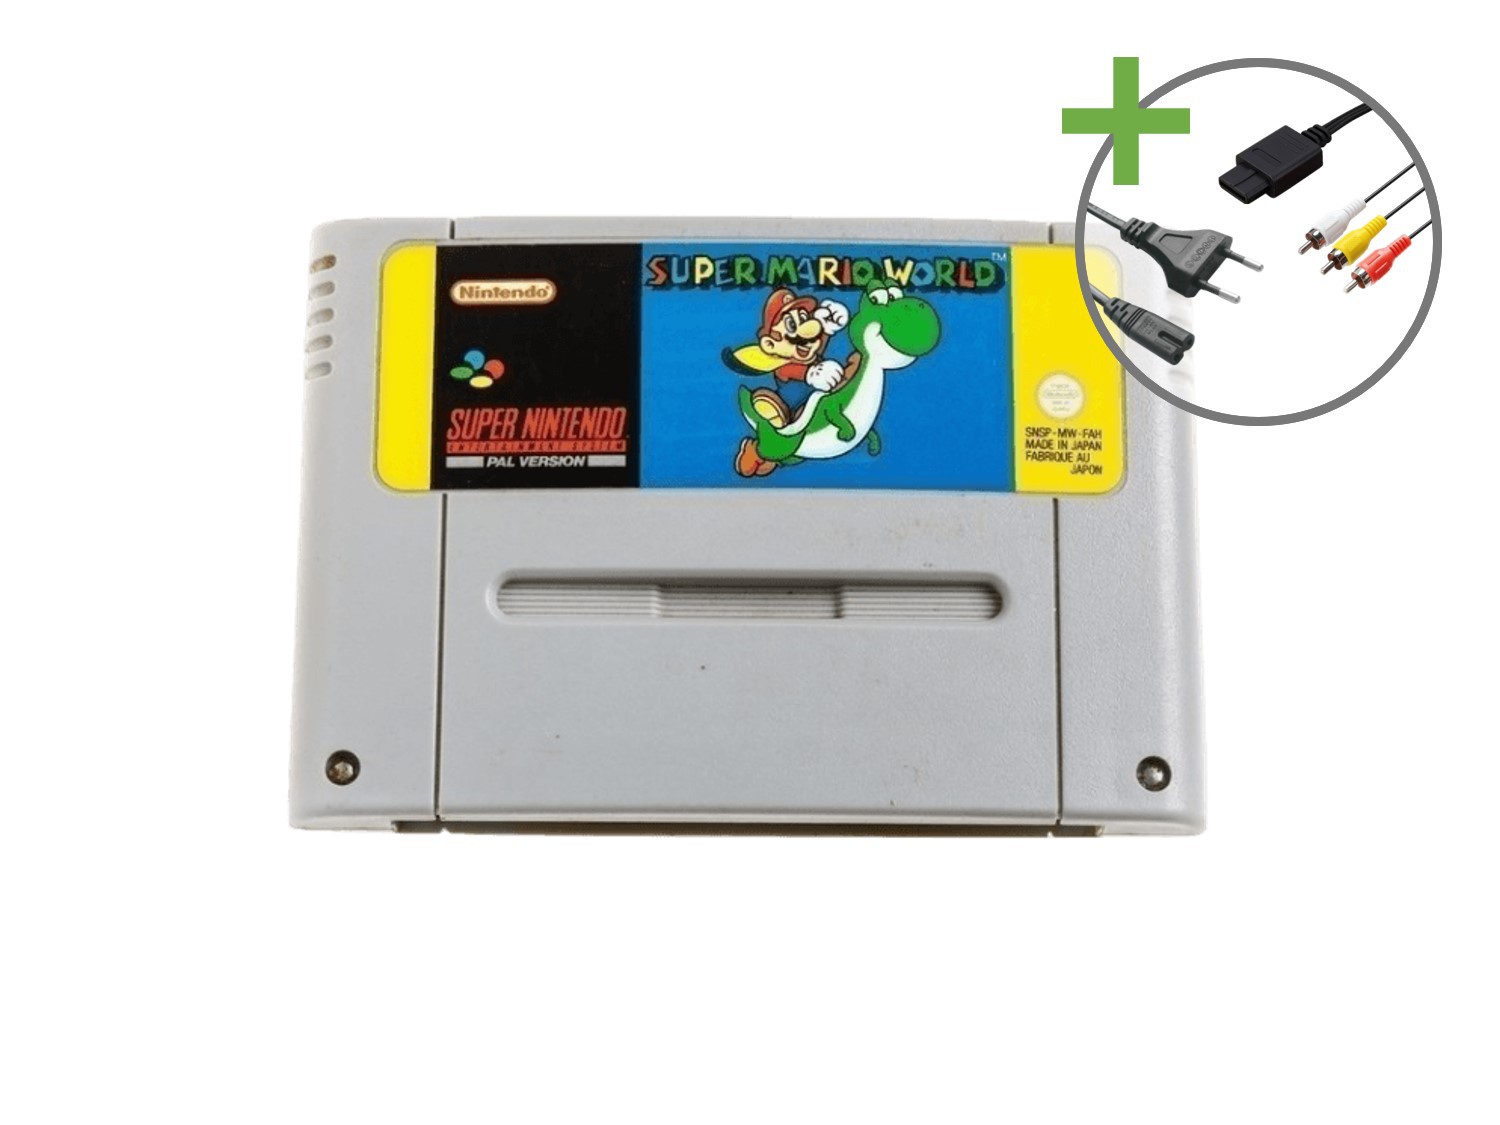 Super Nintendo Starter Pack - Super Mario World Edition - Super Nintendo Hardware - 3